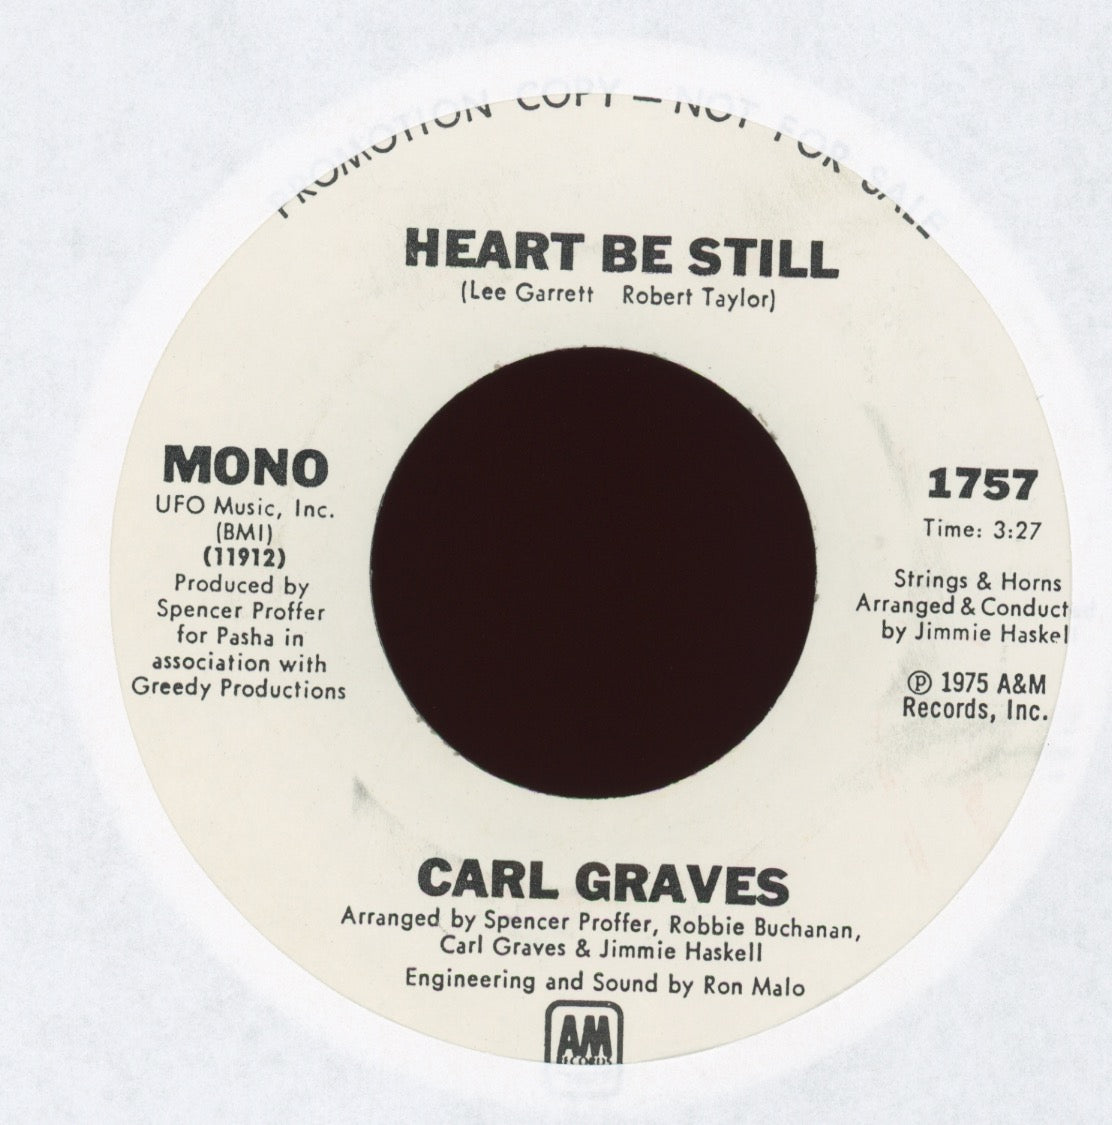 Carl Graves - Heart Be Still on A&M Promo